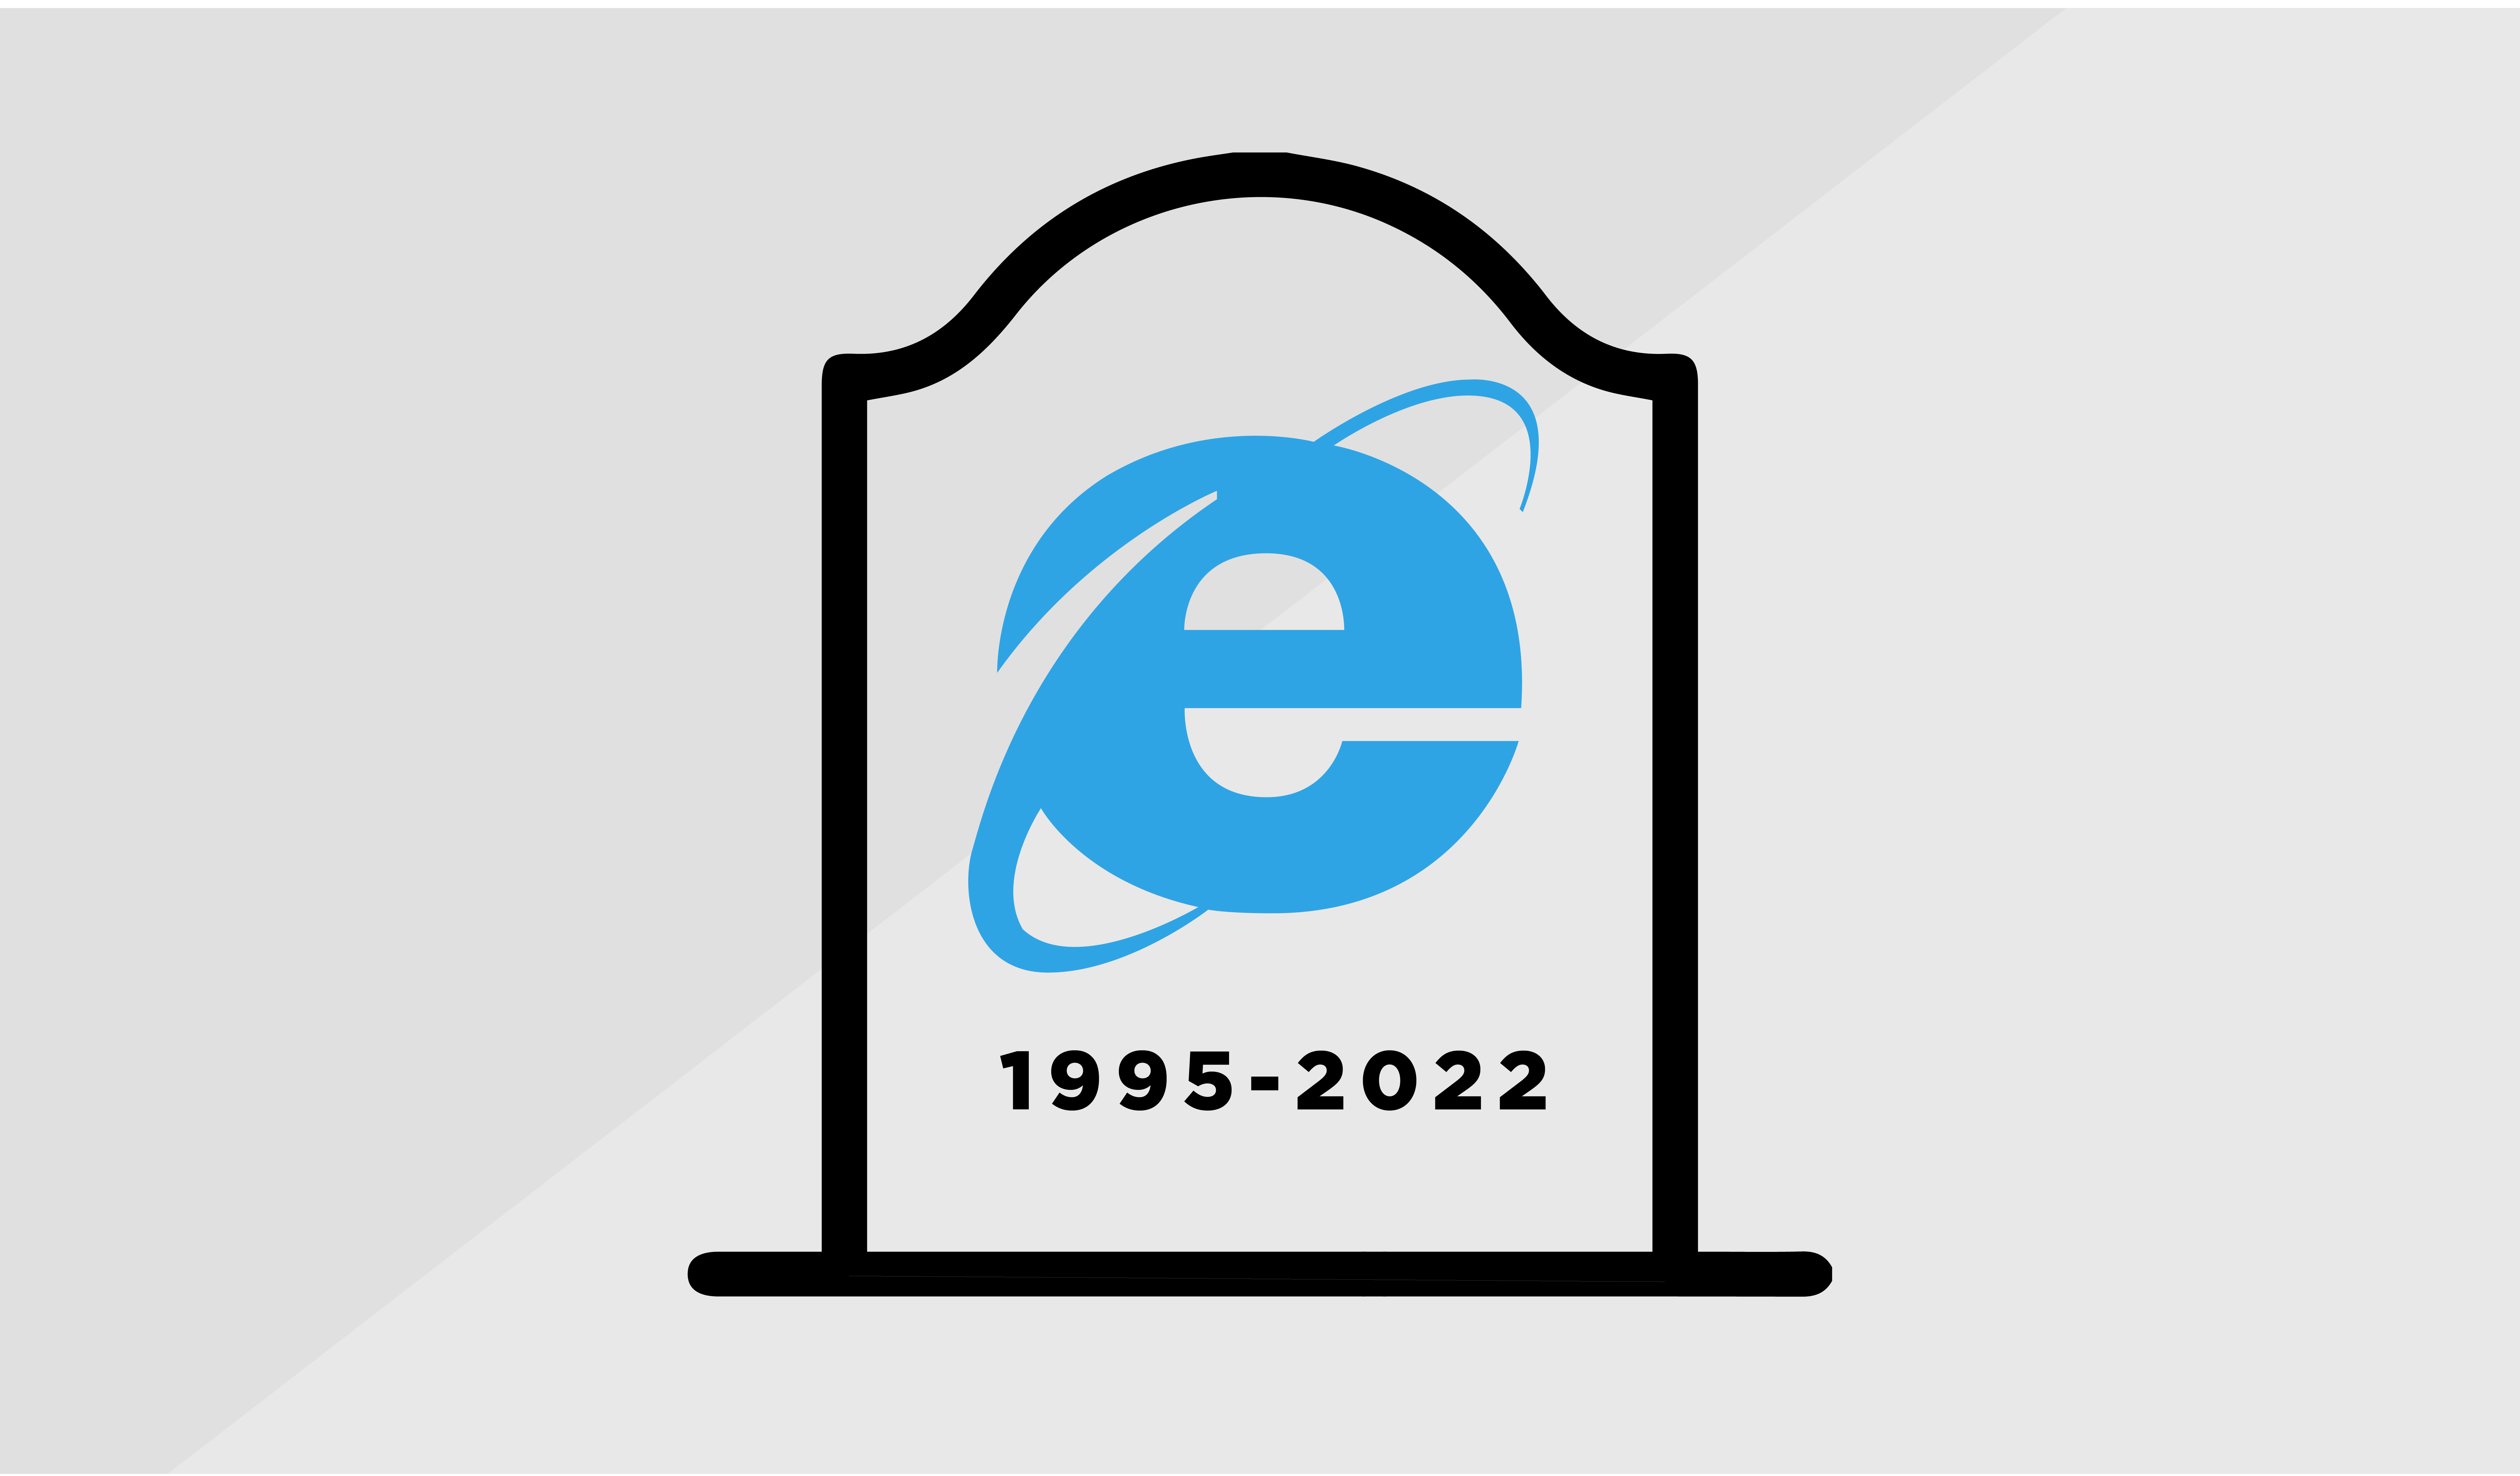 Internet Explorer (IE) retires